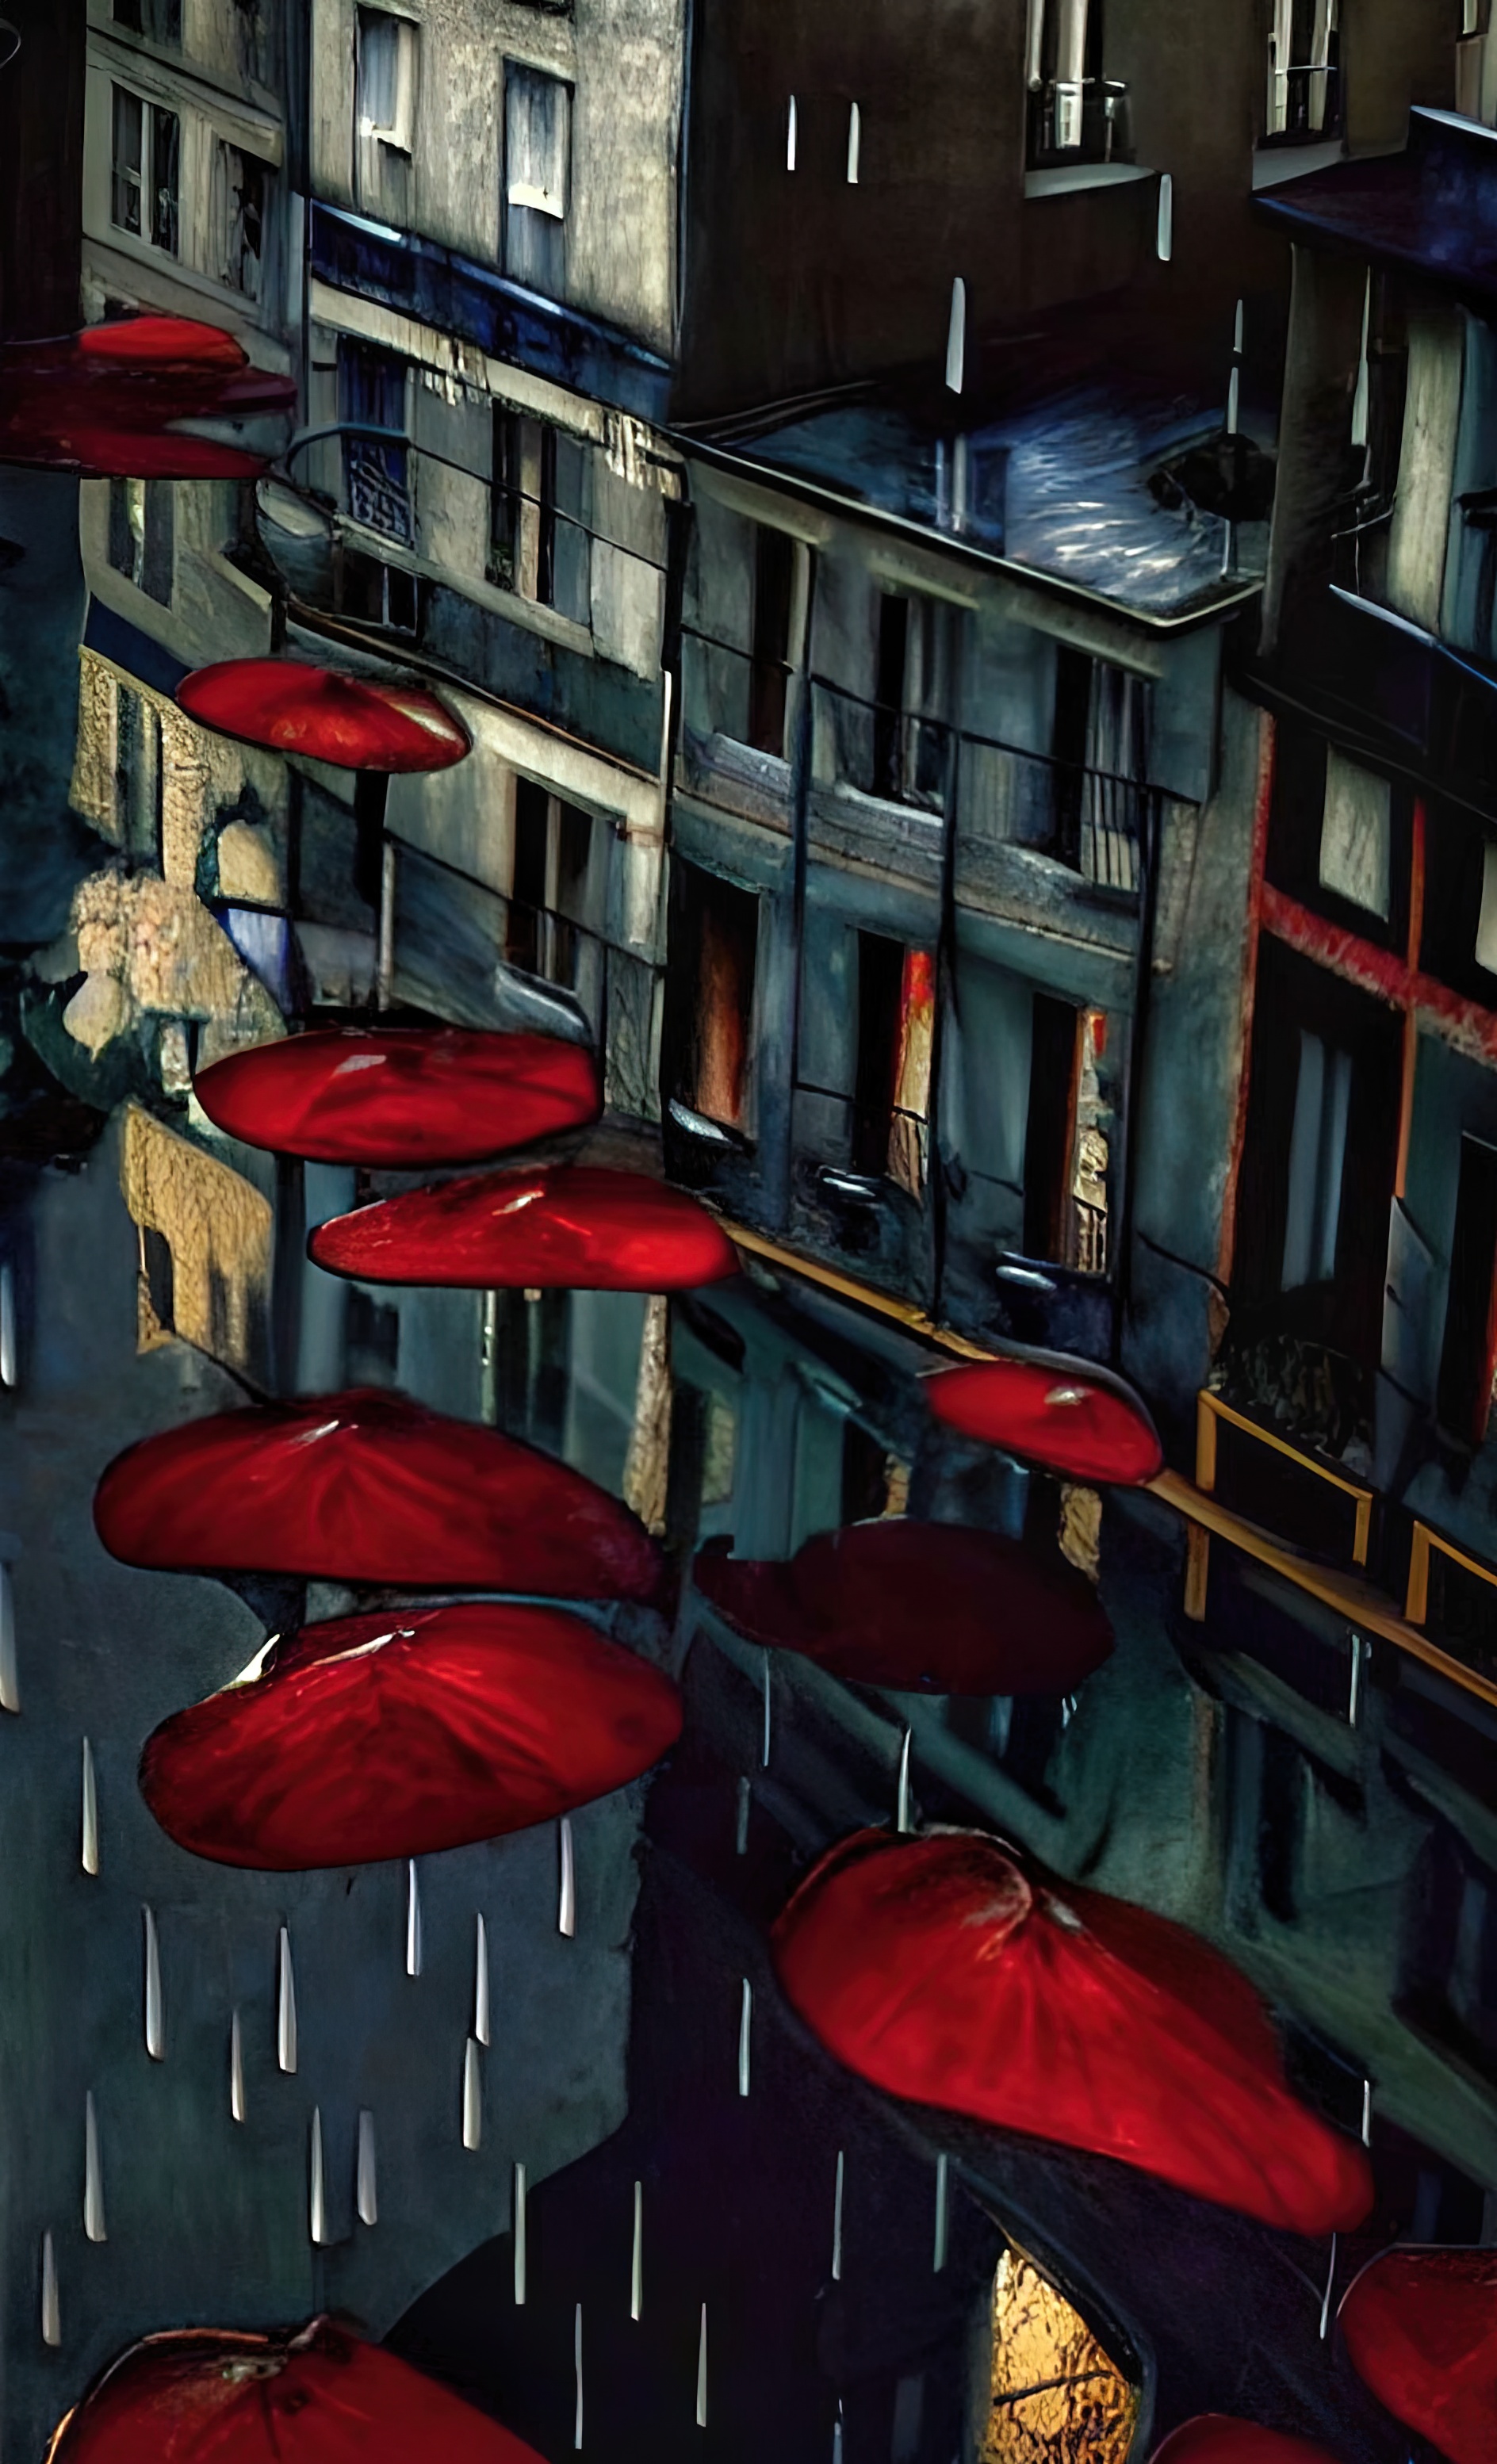 'The Red Umbrellas' |Paolo Galleri|